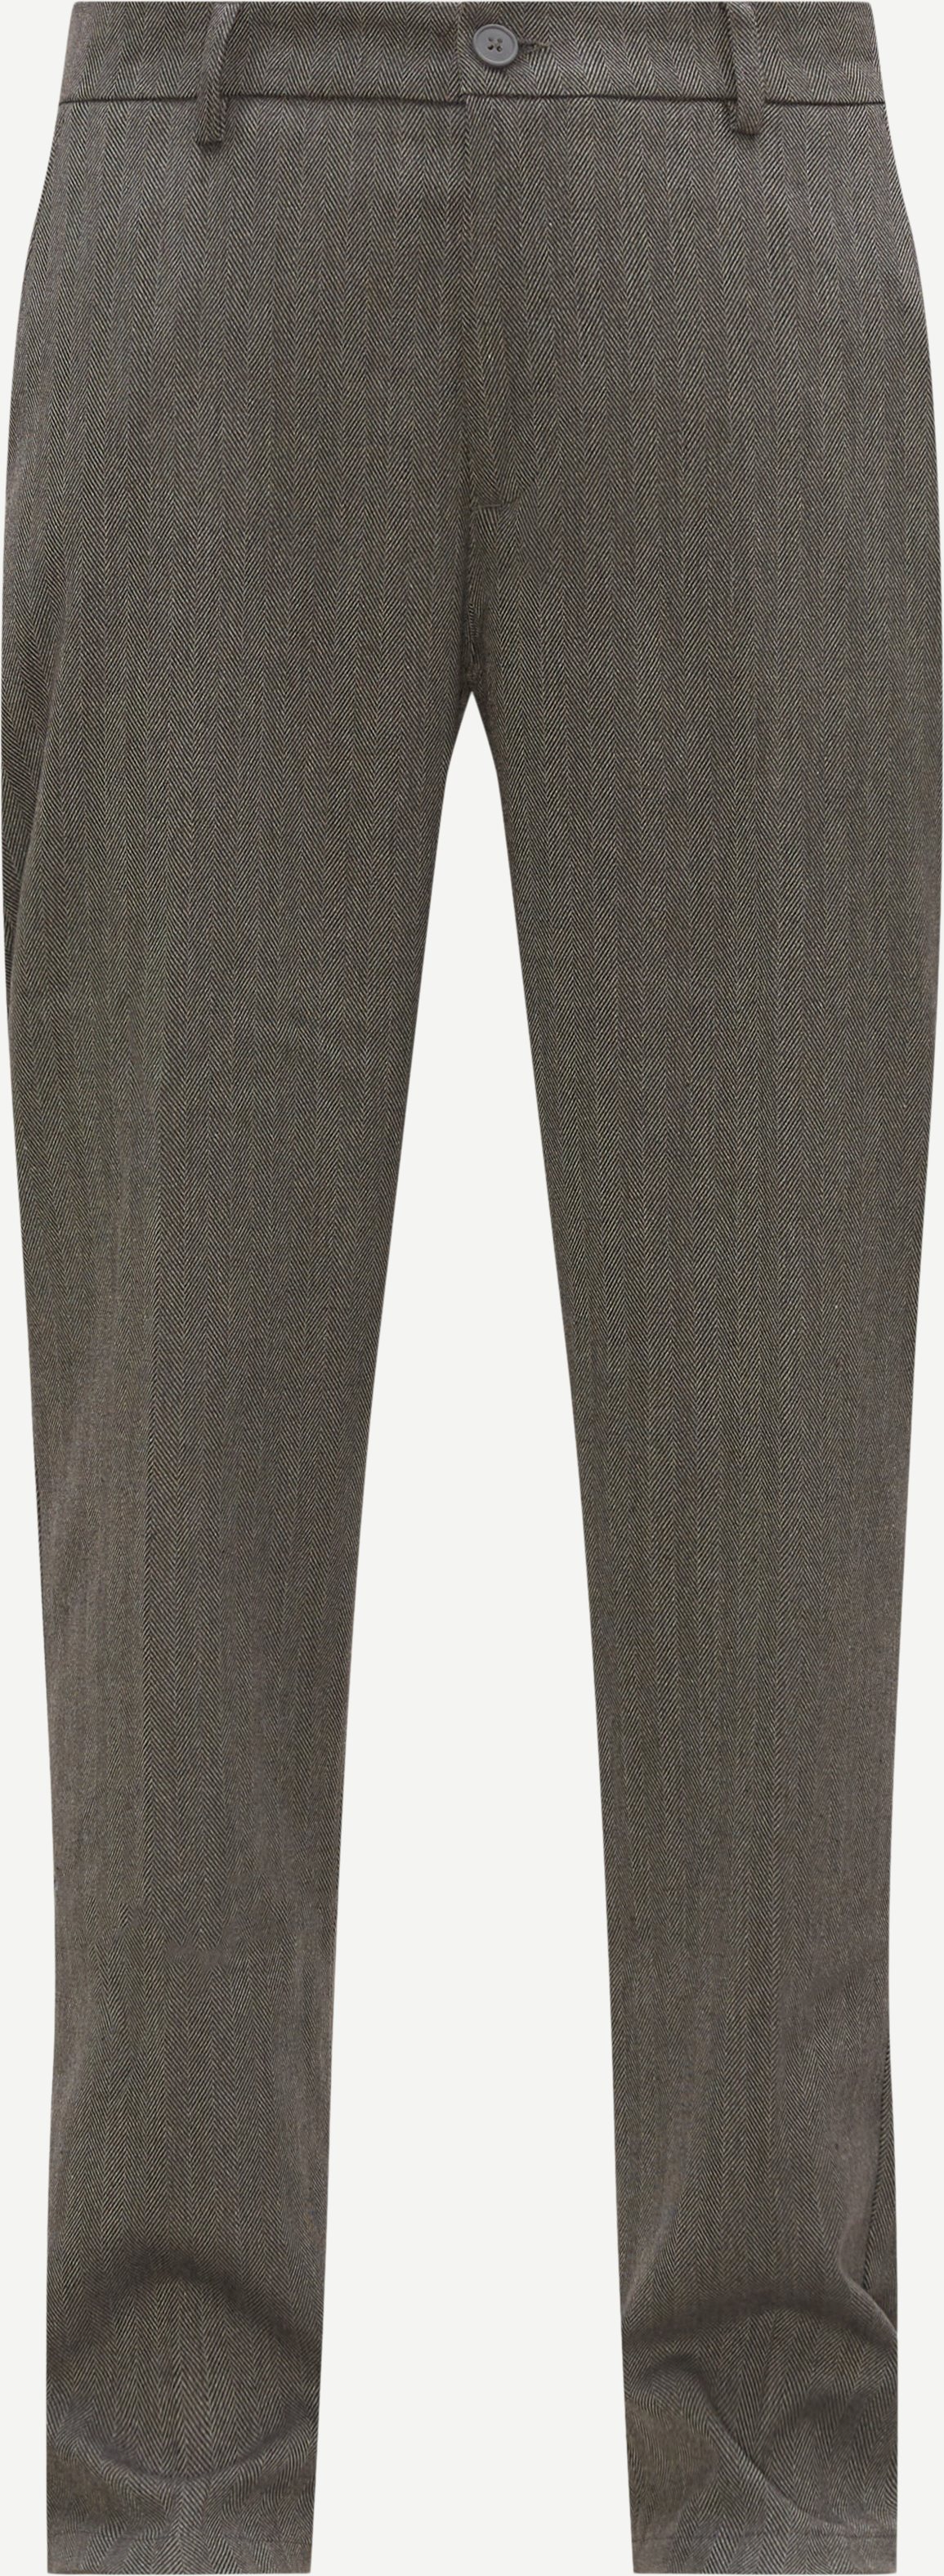 Les Deux Trousers COMO HERRINGBONE SUIT PANTS LDM501085 Grey